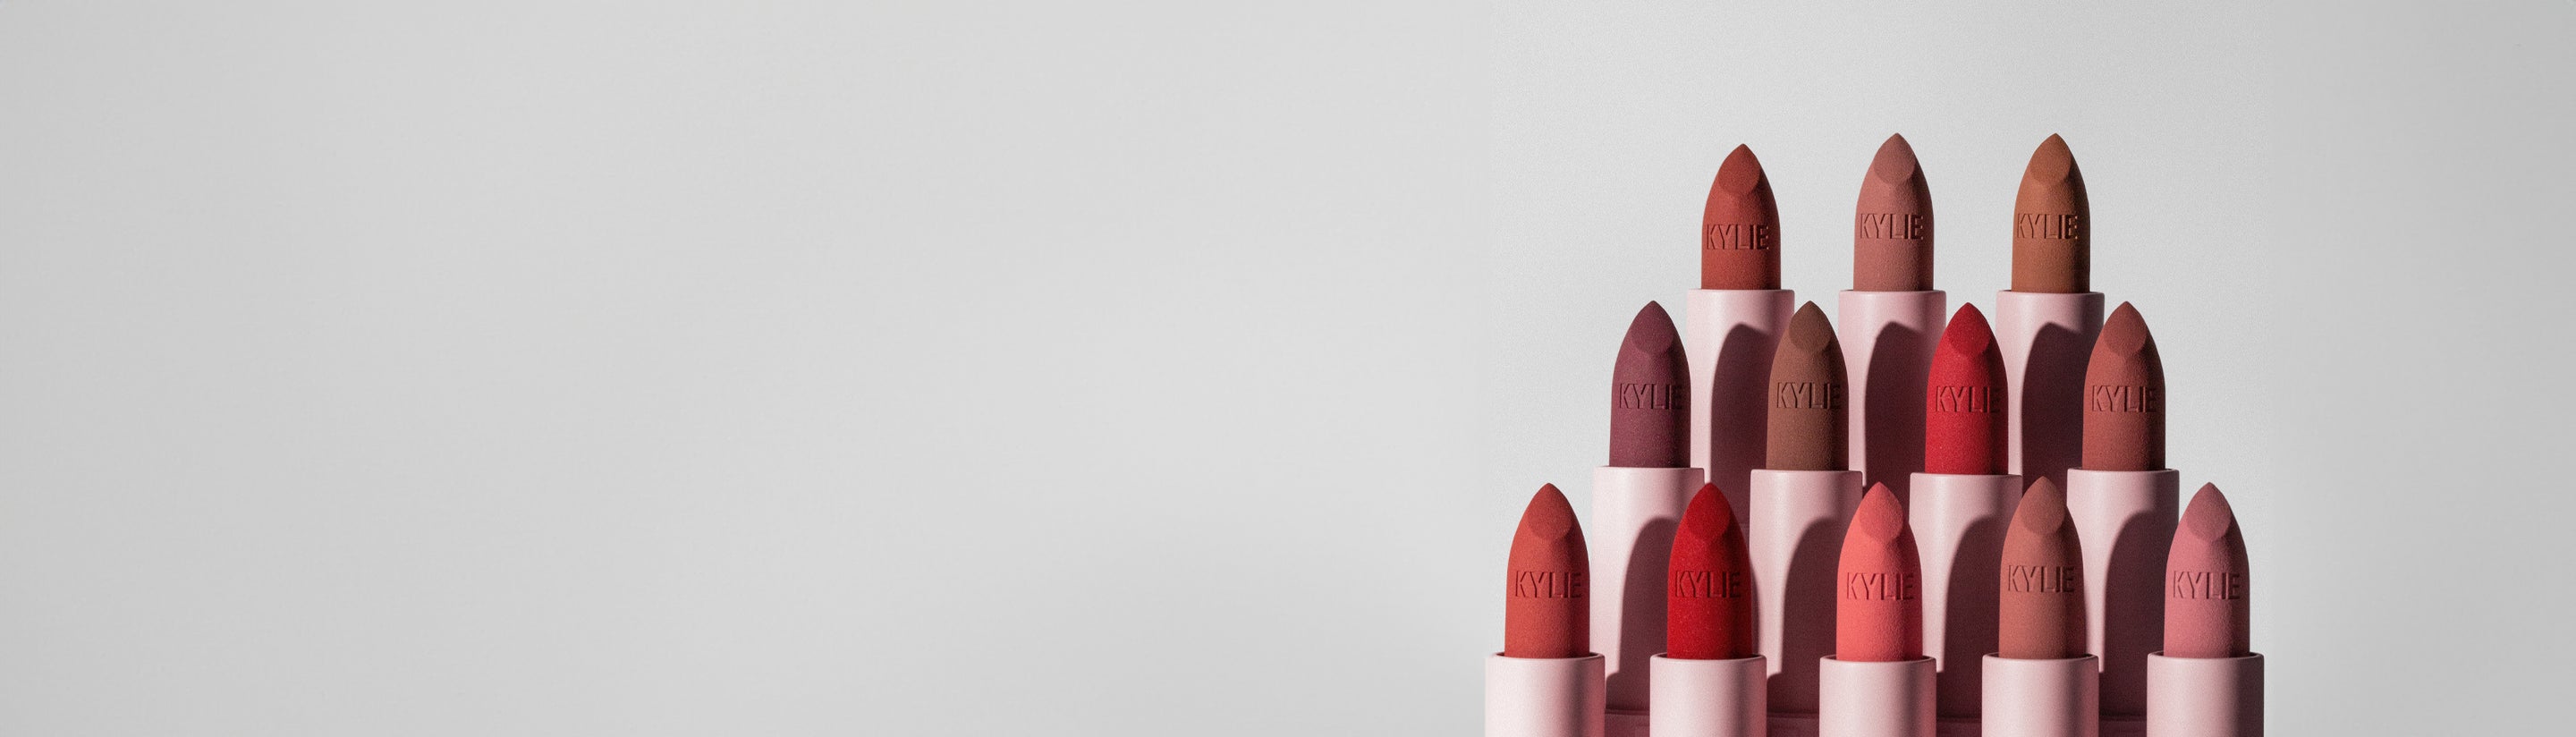 Kylie Cosmetics - Lips - Lipsticks - Matte Lipsticks